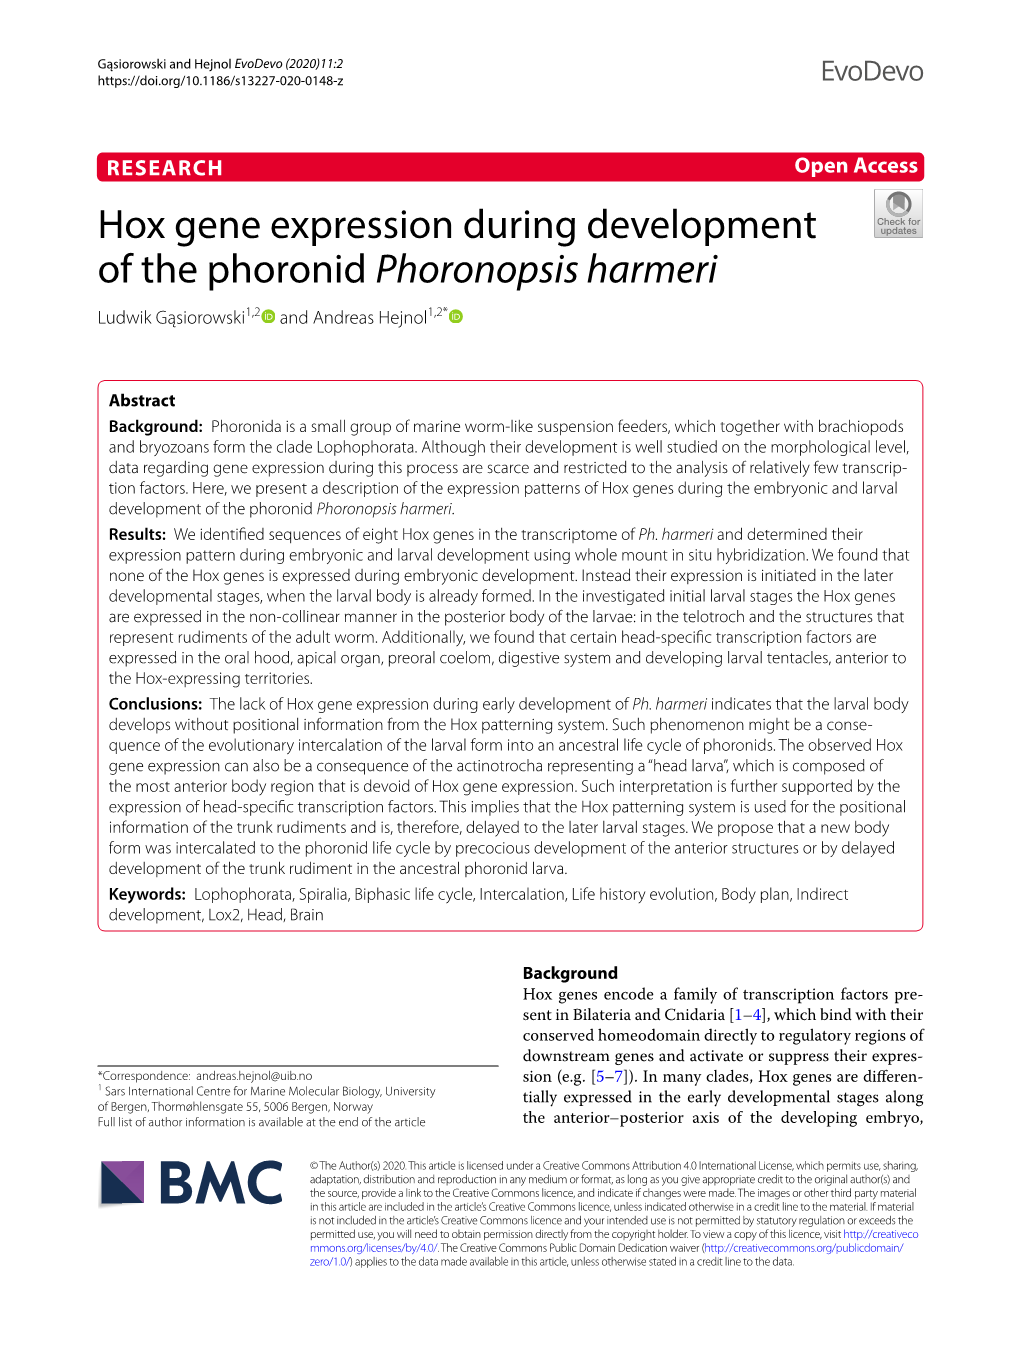 Hox Gene Expression During Development of the Phoronid Phoronopsis Harmeri Ludwik Gąsiorowski1,2 and Andreas Hejnol1,2*